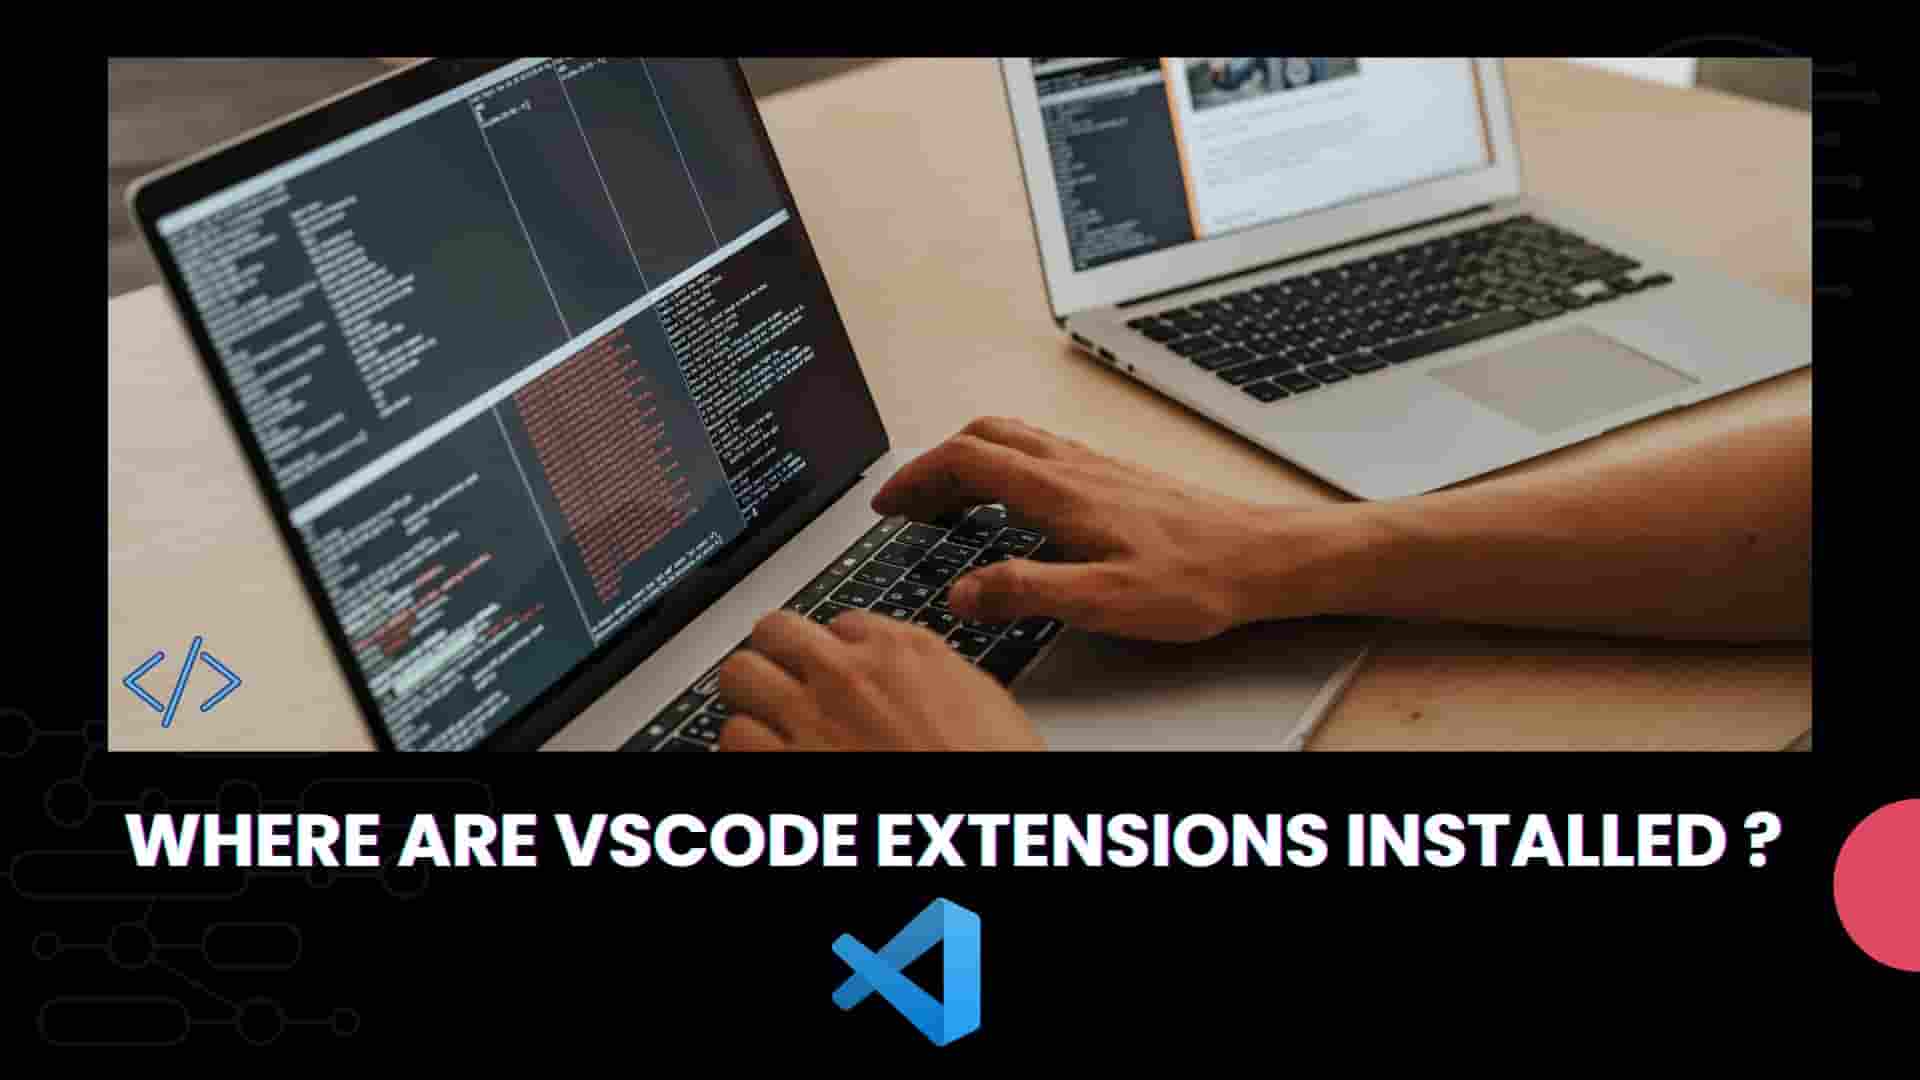 vscode extension install location?